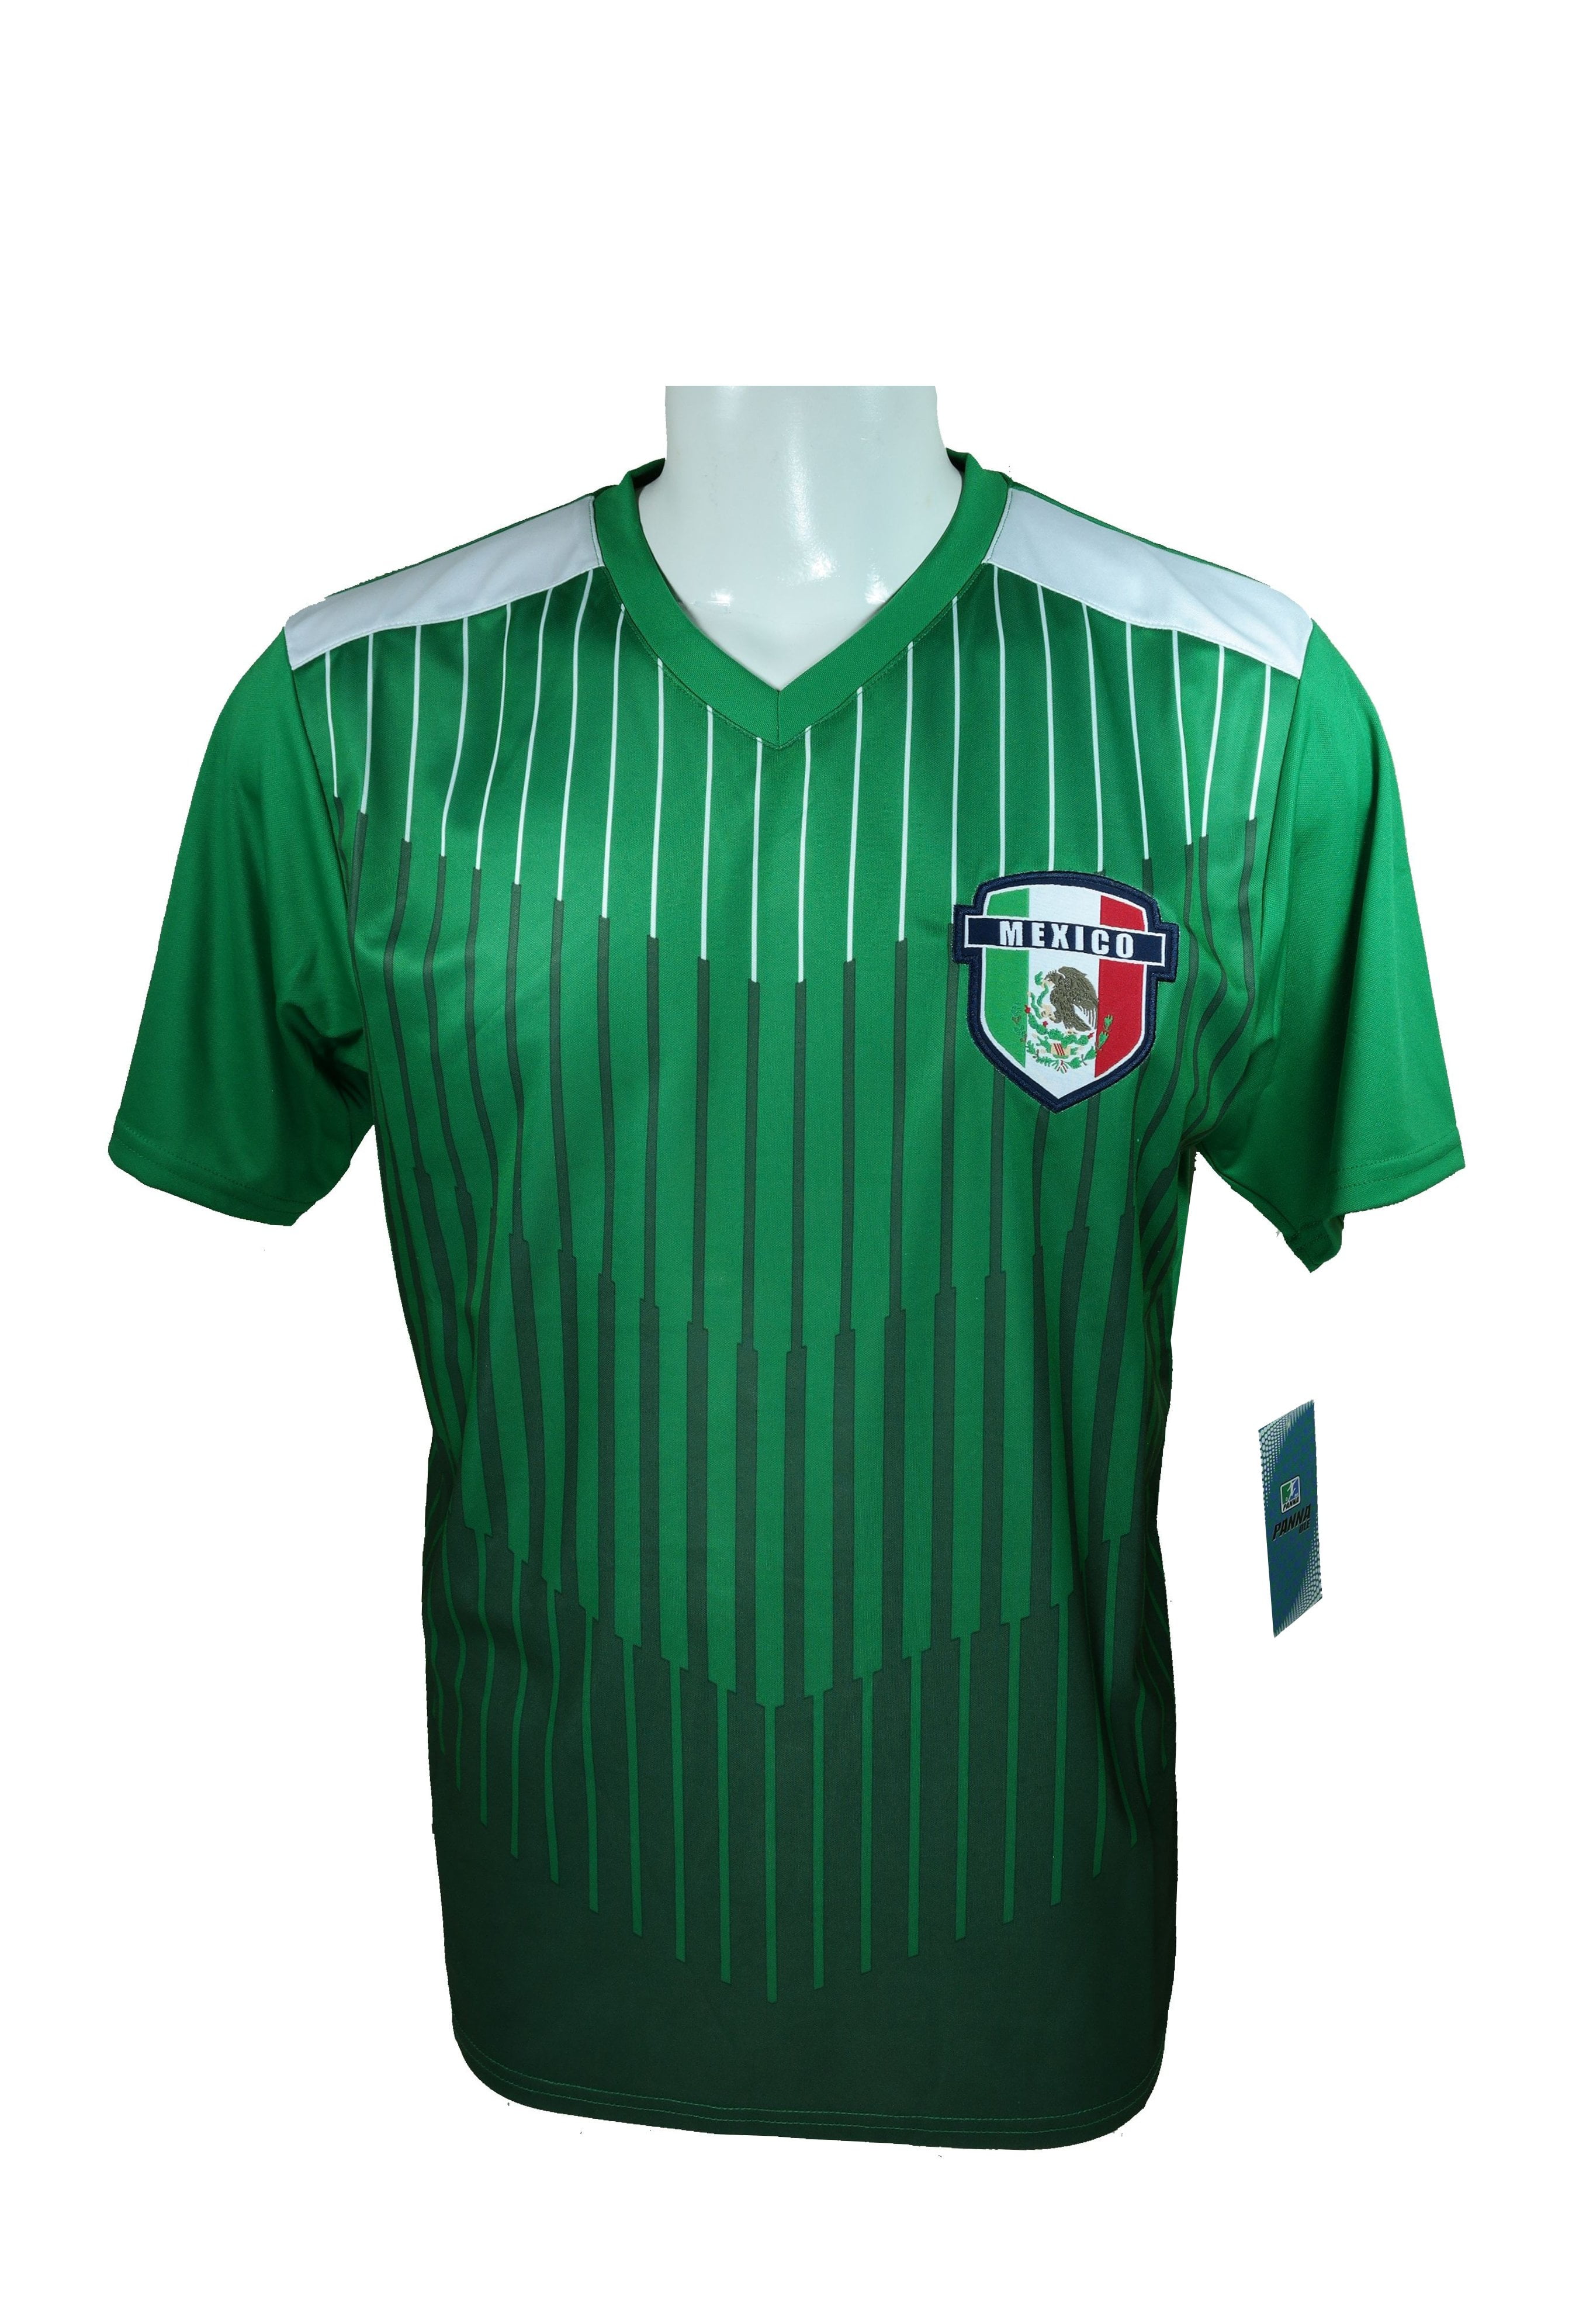 NEW 2020 Mexico Home Soccer Jersey Short Sleeve Adult Men's Football Shirt Set 